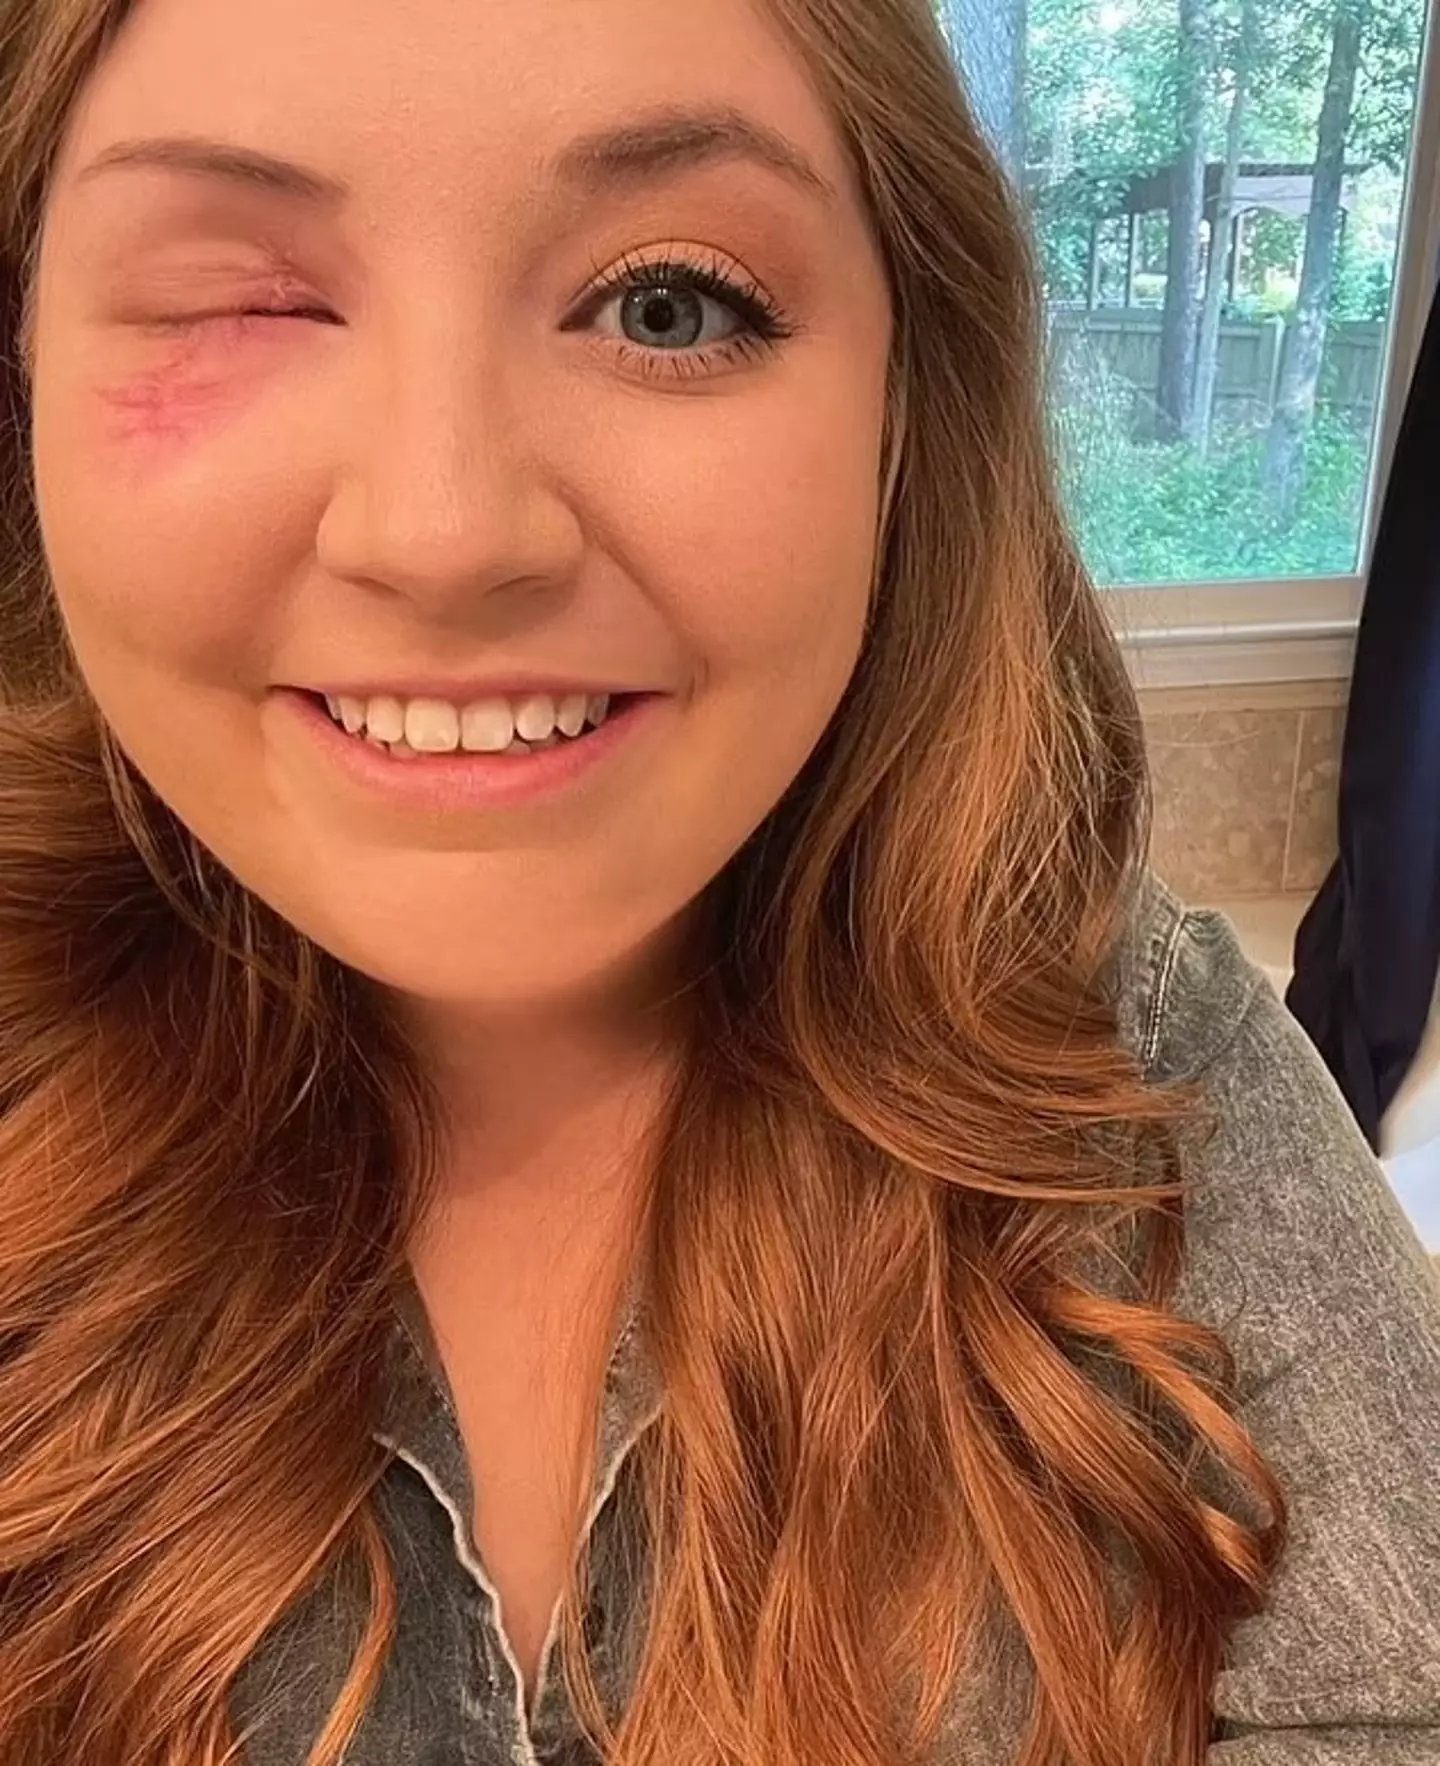 Hannah lost her eye following the 'minor' car crash.